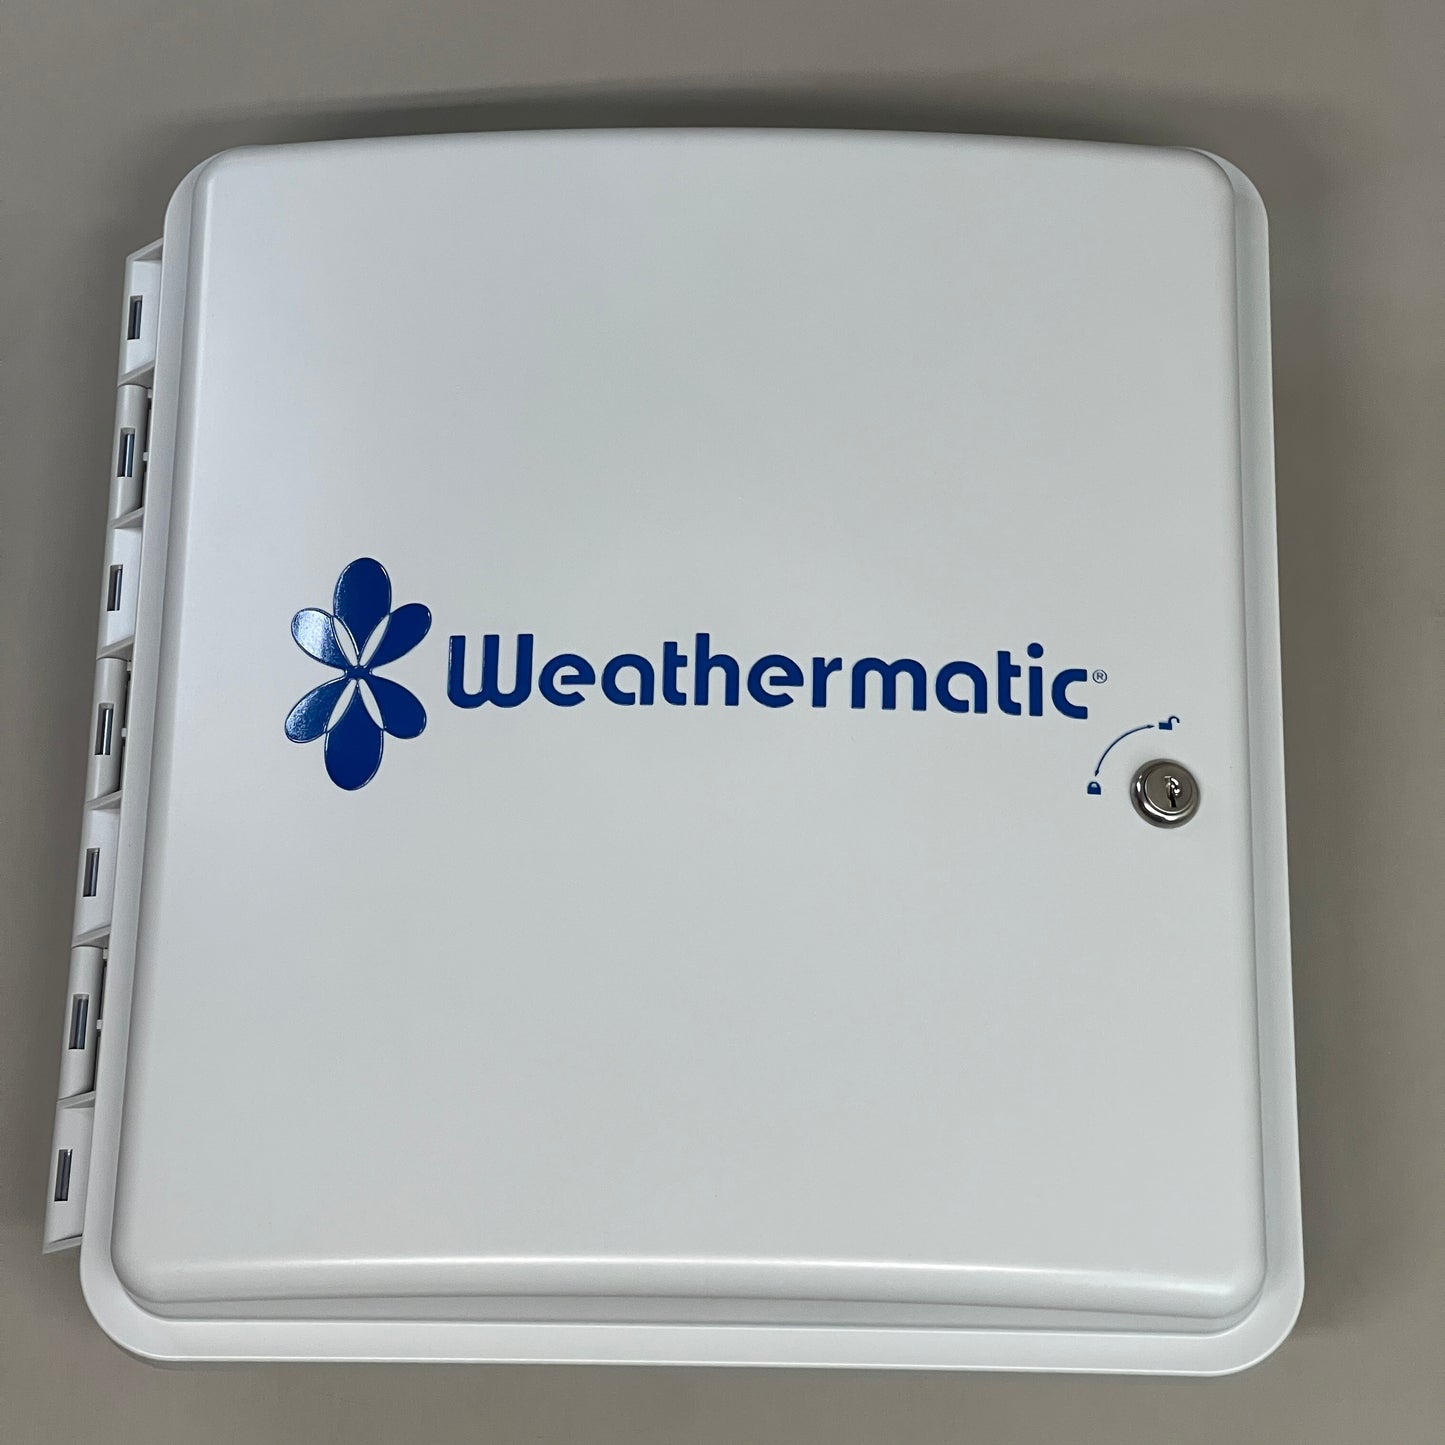 WEATHERMATIC SmartLink 24 Station Indoor/Outdoor Controller M1NA Aircard SL4824 Bundle (New)